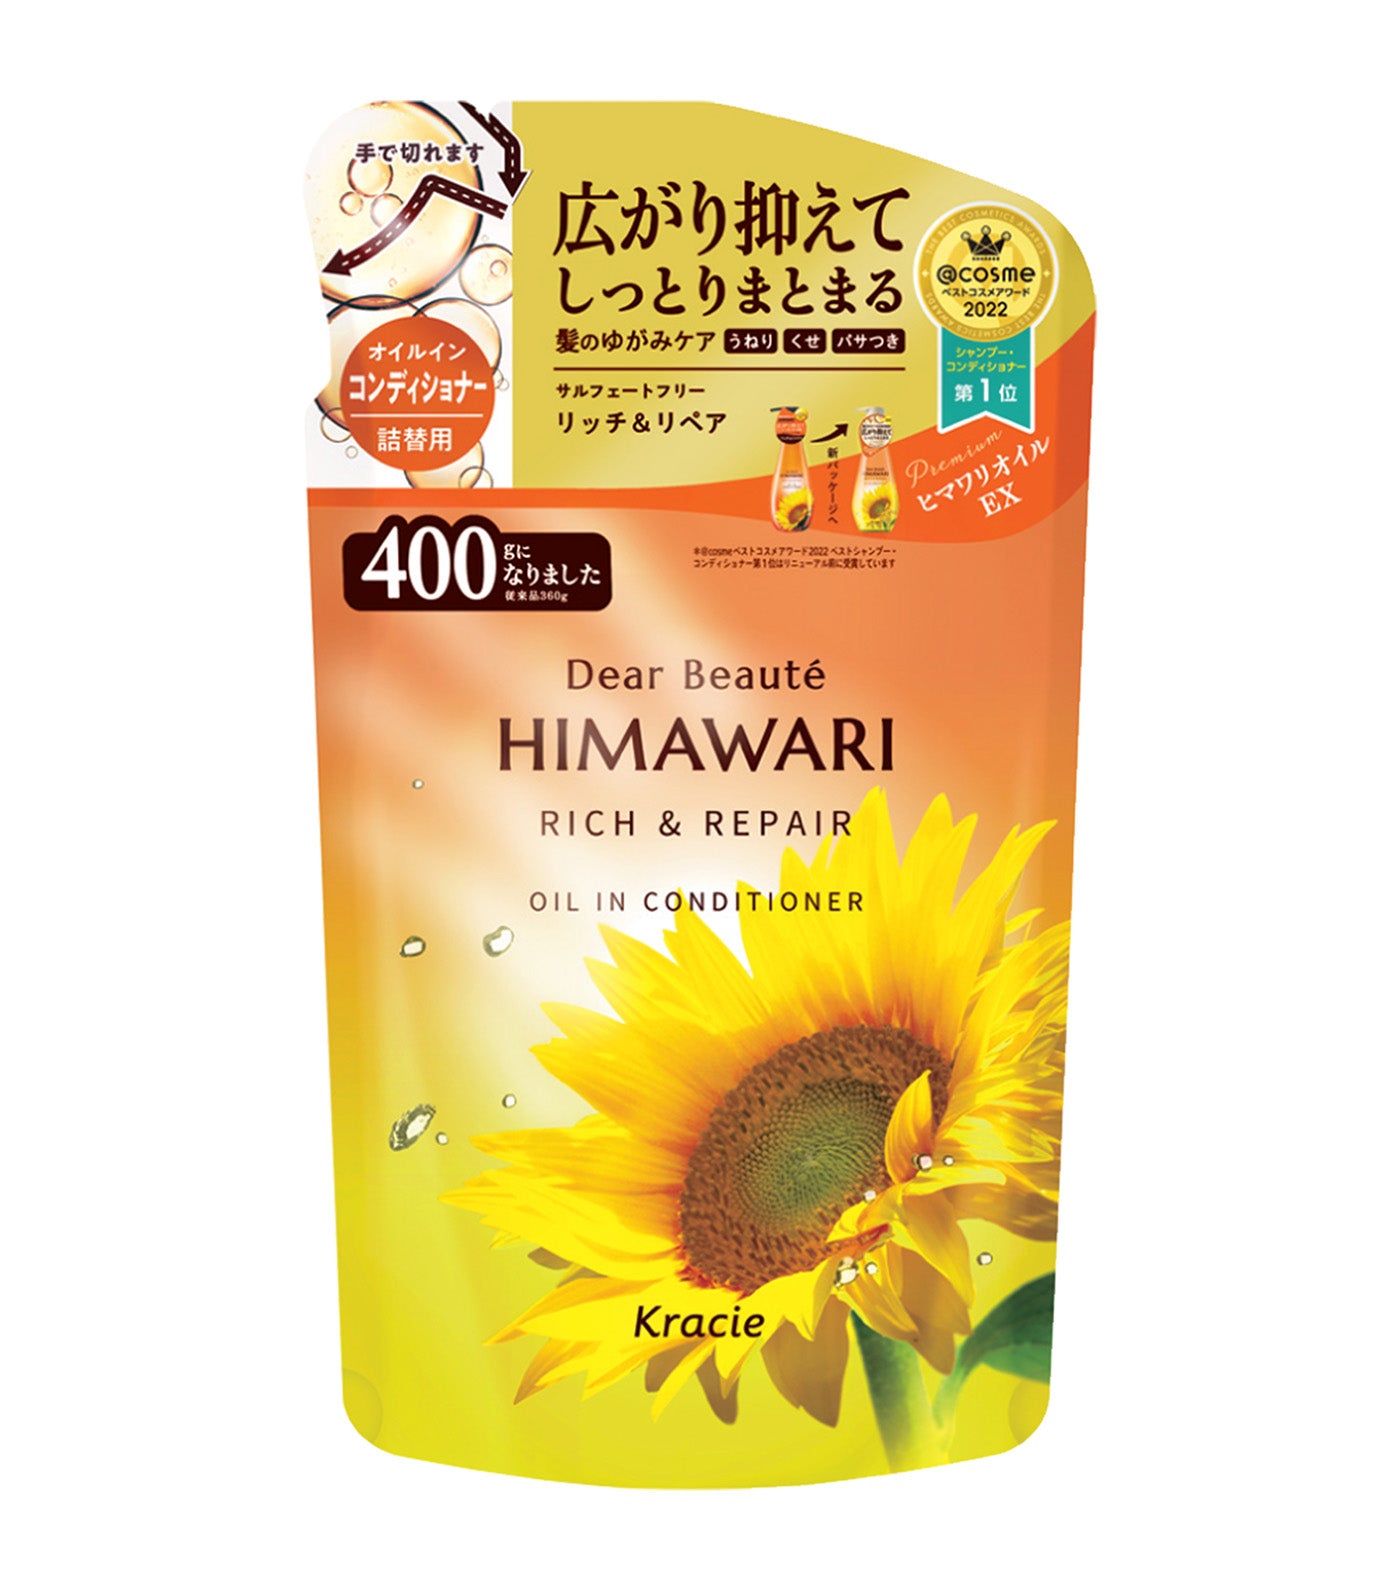 Dear Beaute Himawari Rich & Repair Oil In Conditioner Refill Pack